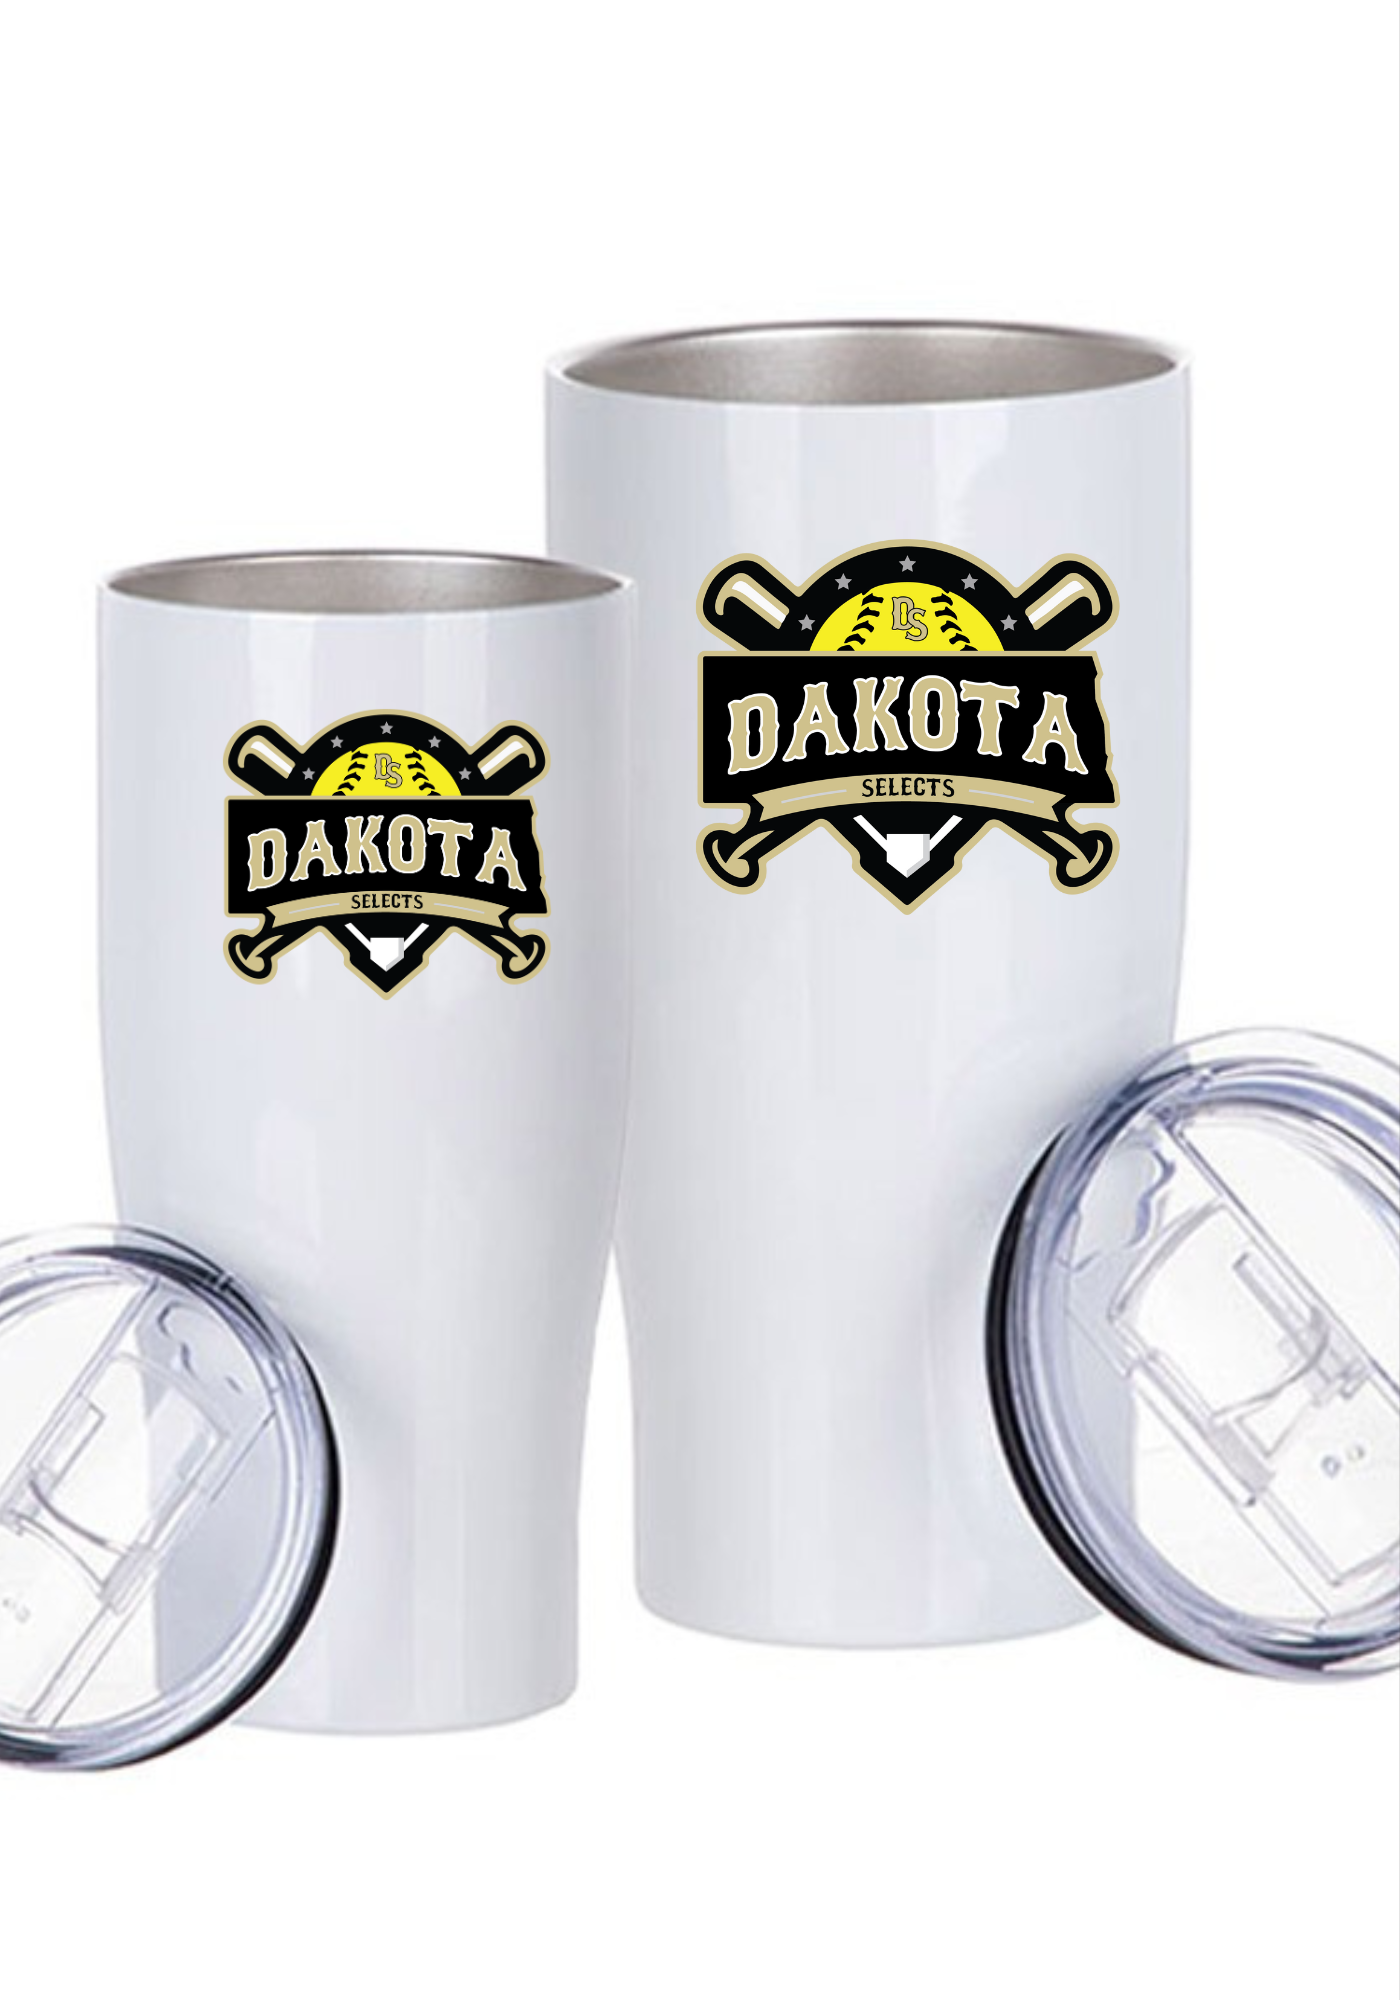 Dakota Selects Softball Tumblers